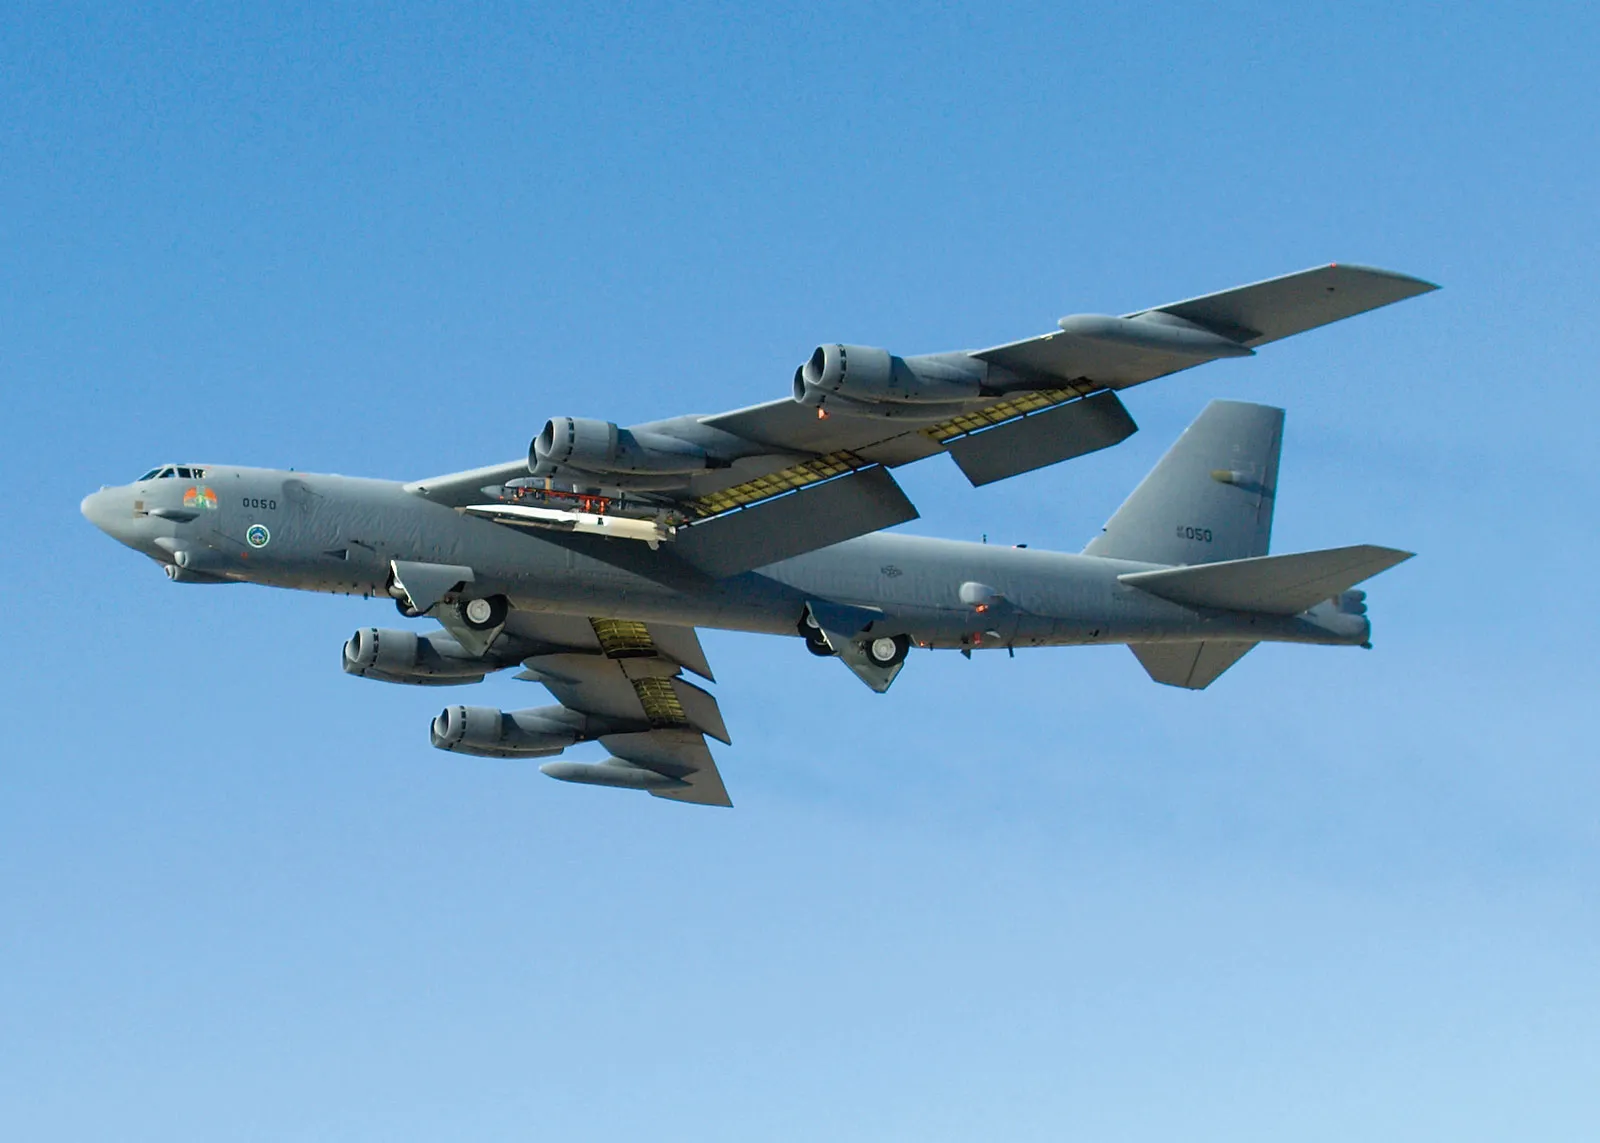 Un bombardero nuclear estadounidense B-52H volvió a volar a 15 km de Rusia y ejecutó una maniobra brusca a 170 km de San Petersburgo